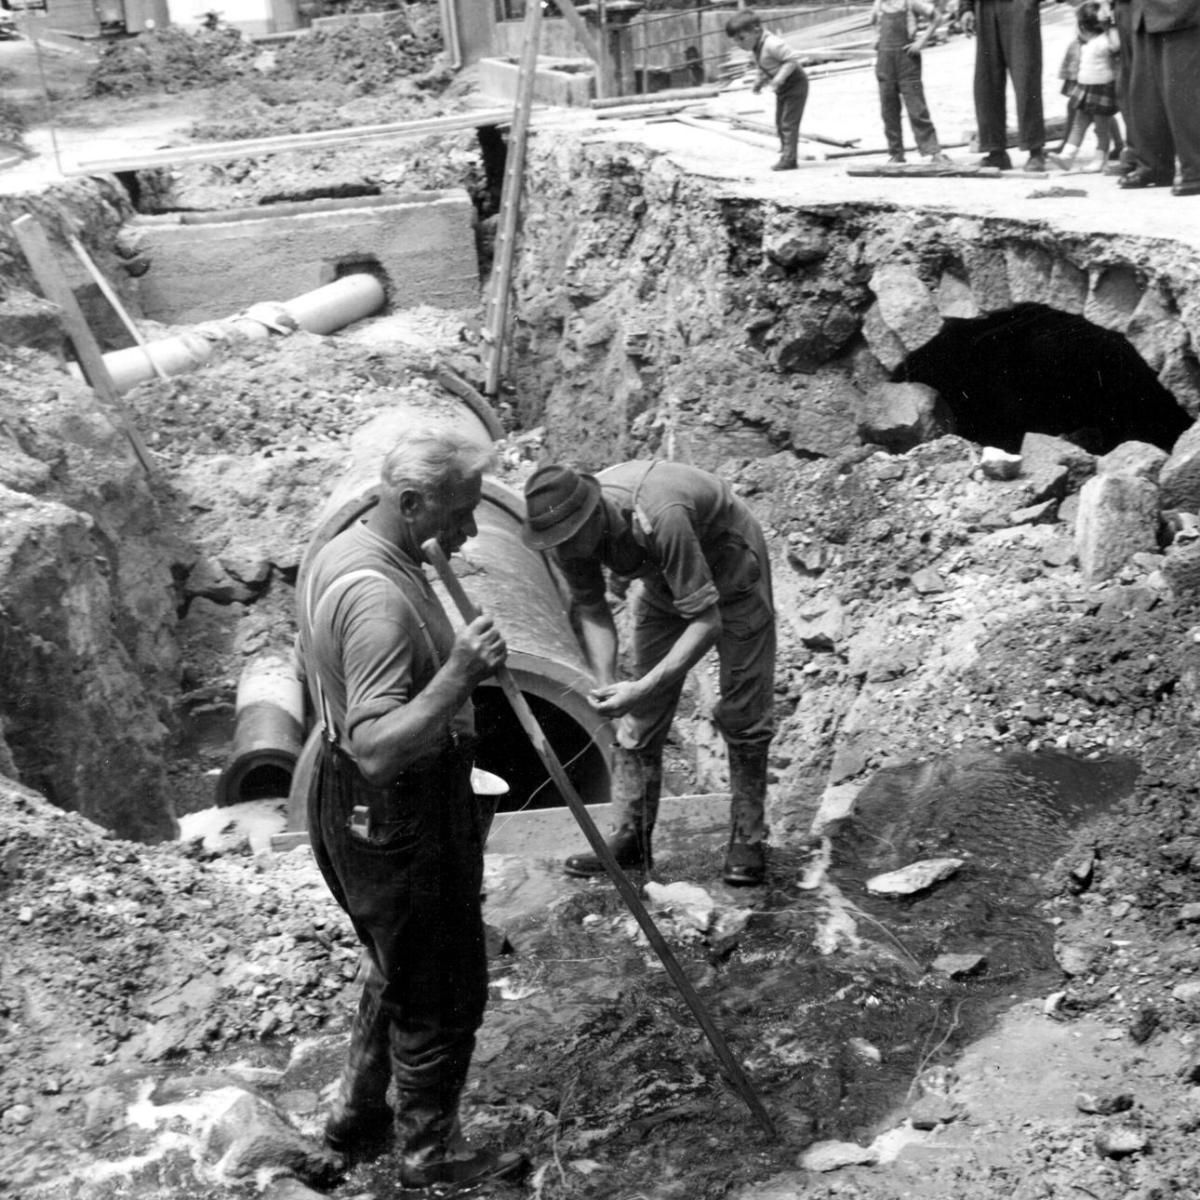 1963: Gewölbe entdeckt beim Wasserleitung legen (Quelle: Walter Brants)